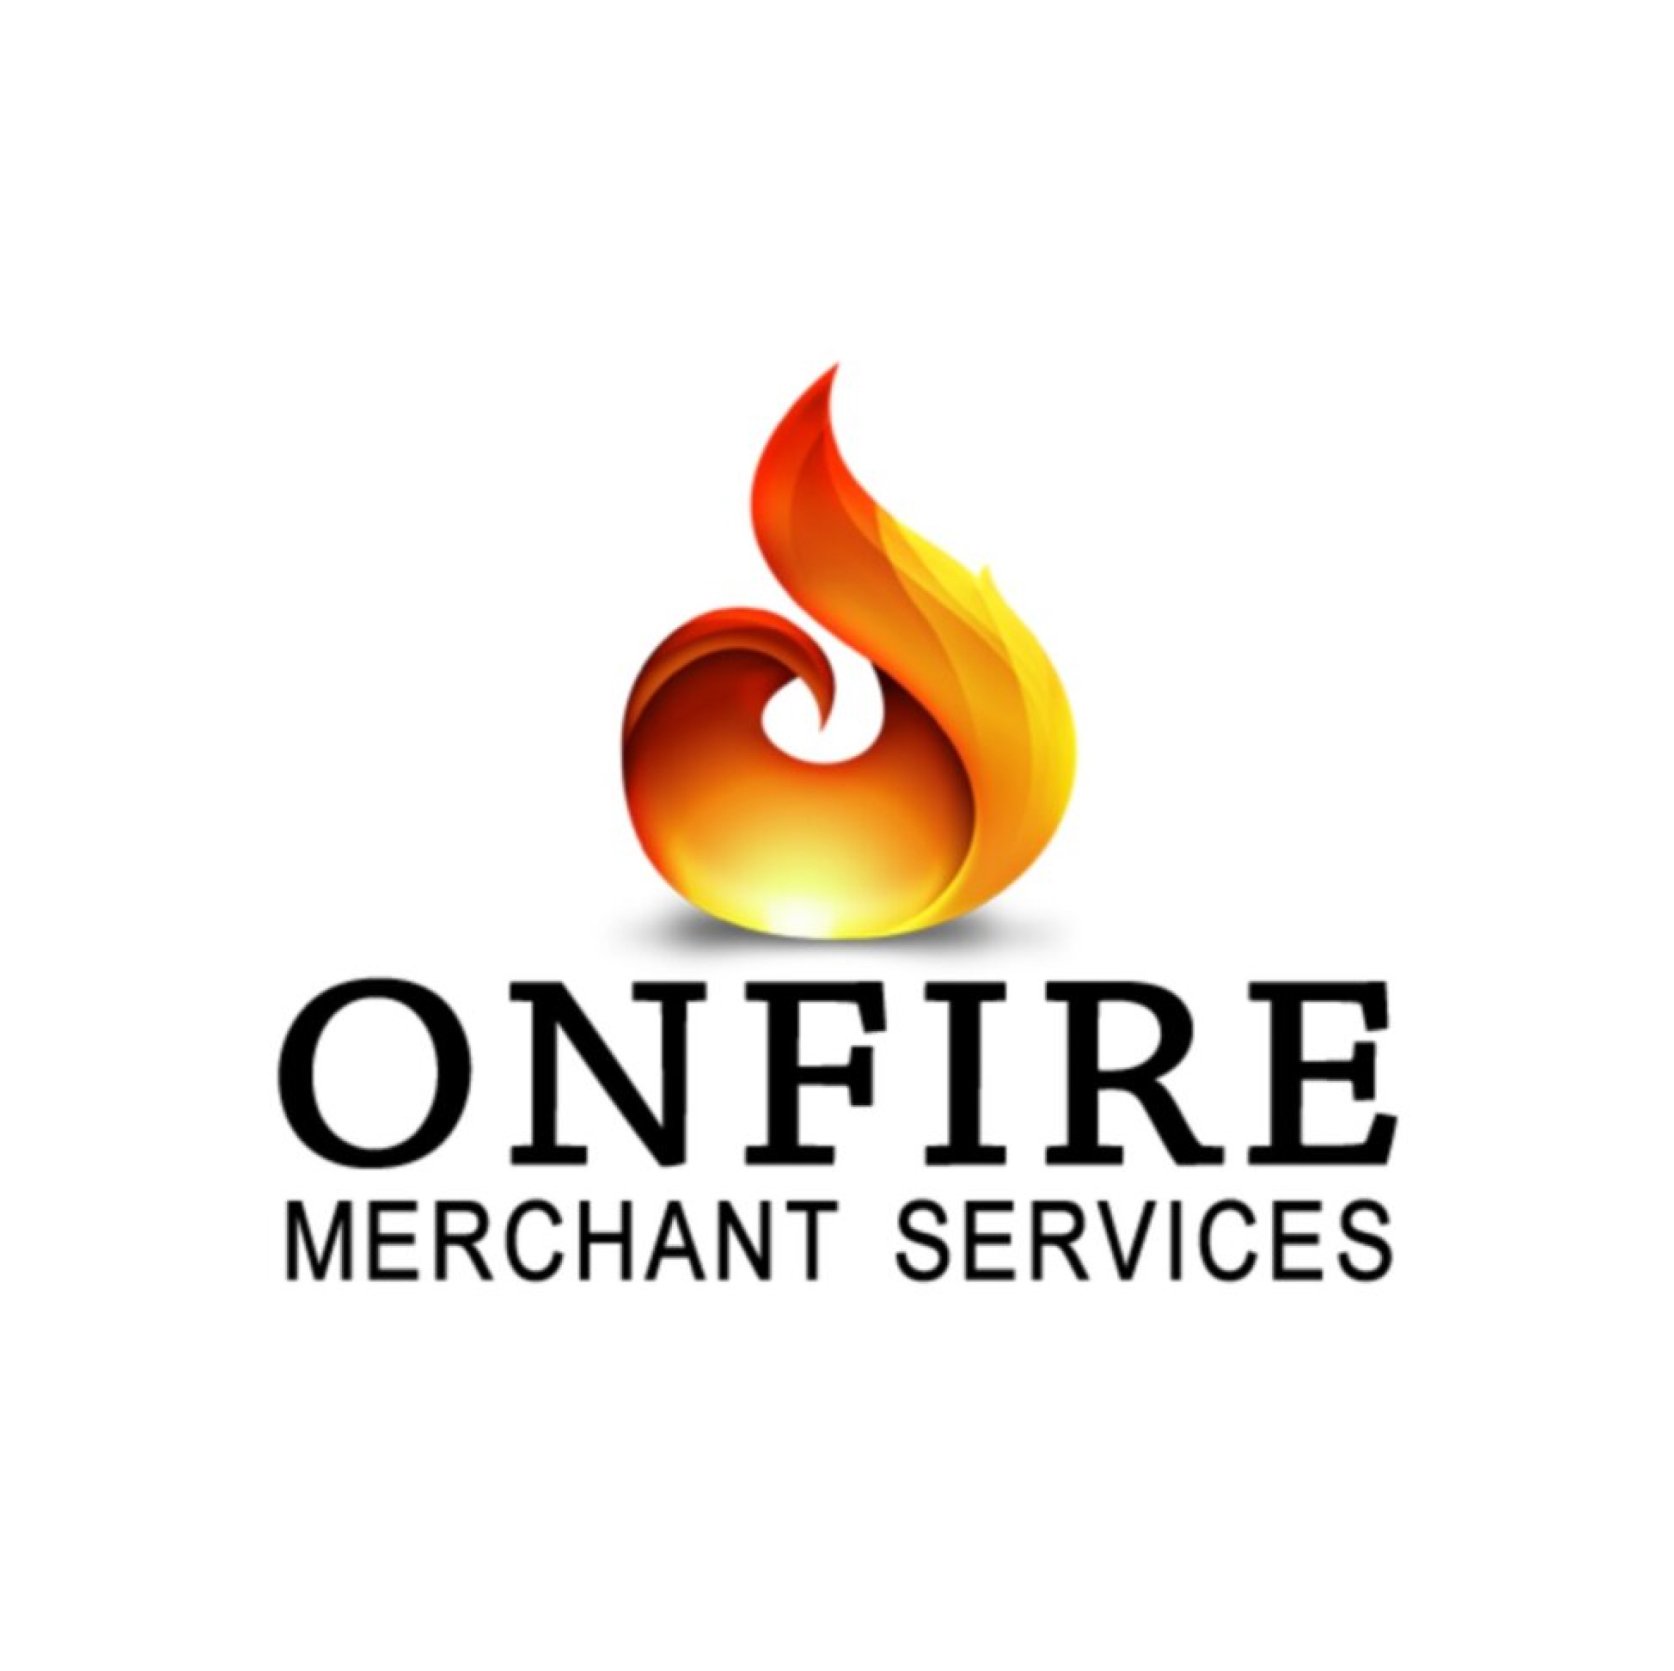 On Fire Merchant Services